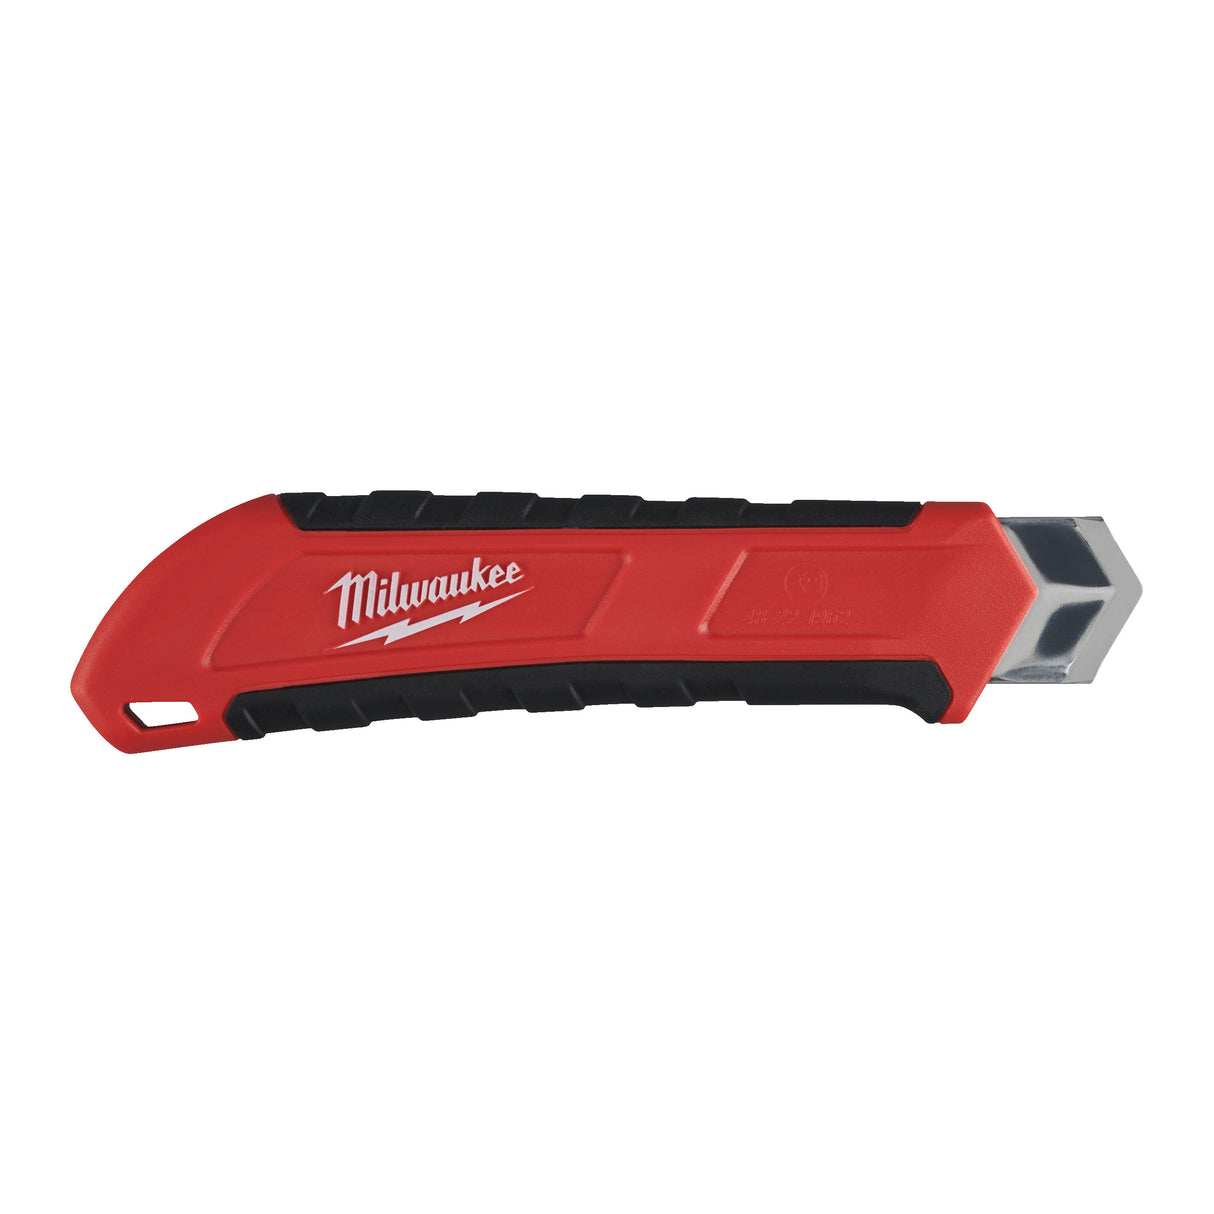 Milwaukee Cuttermesser 48221962 roteswerkzeug